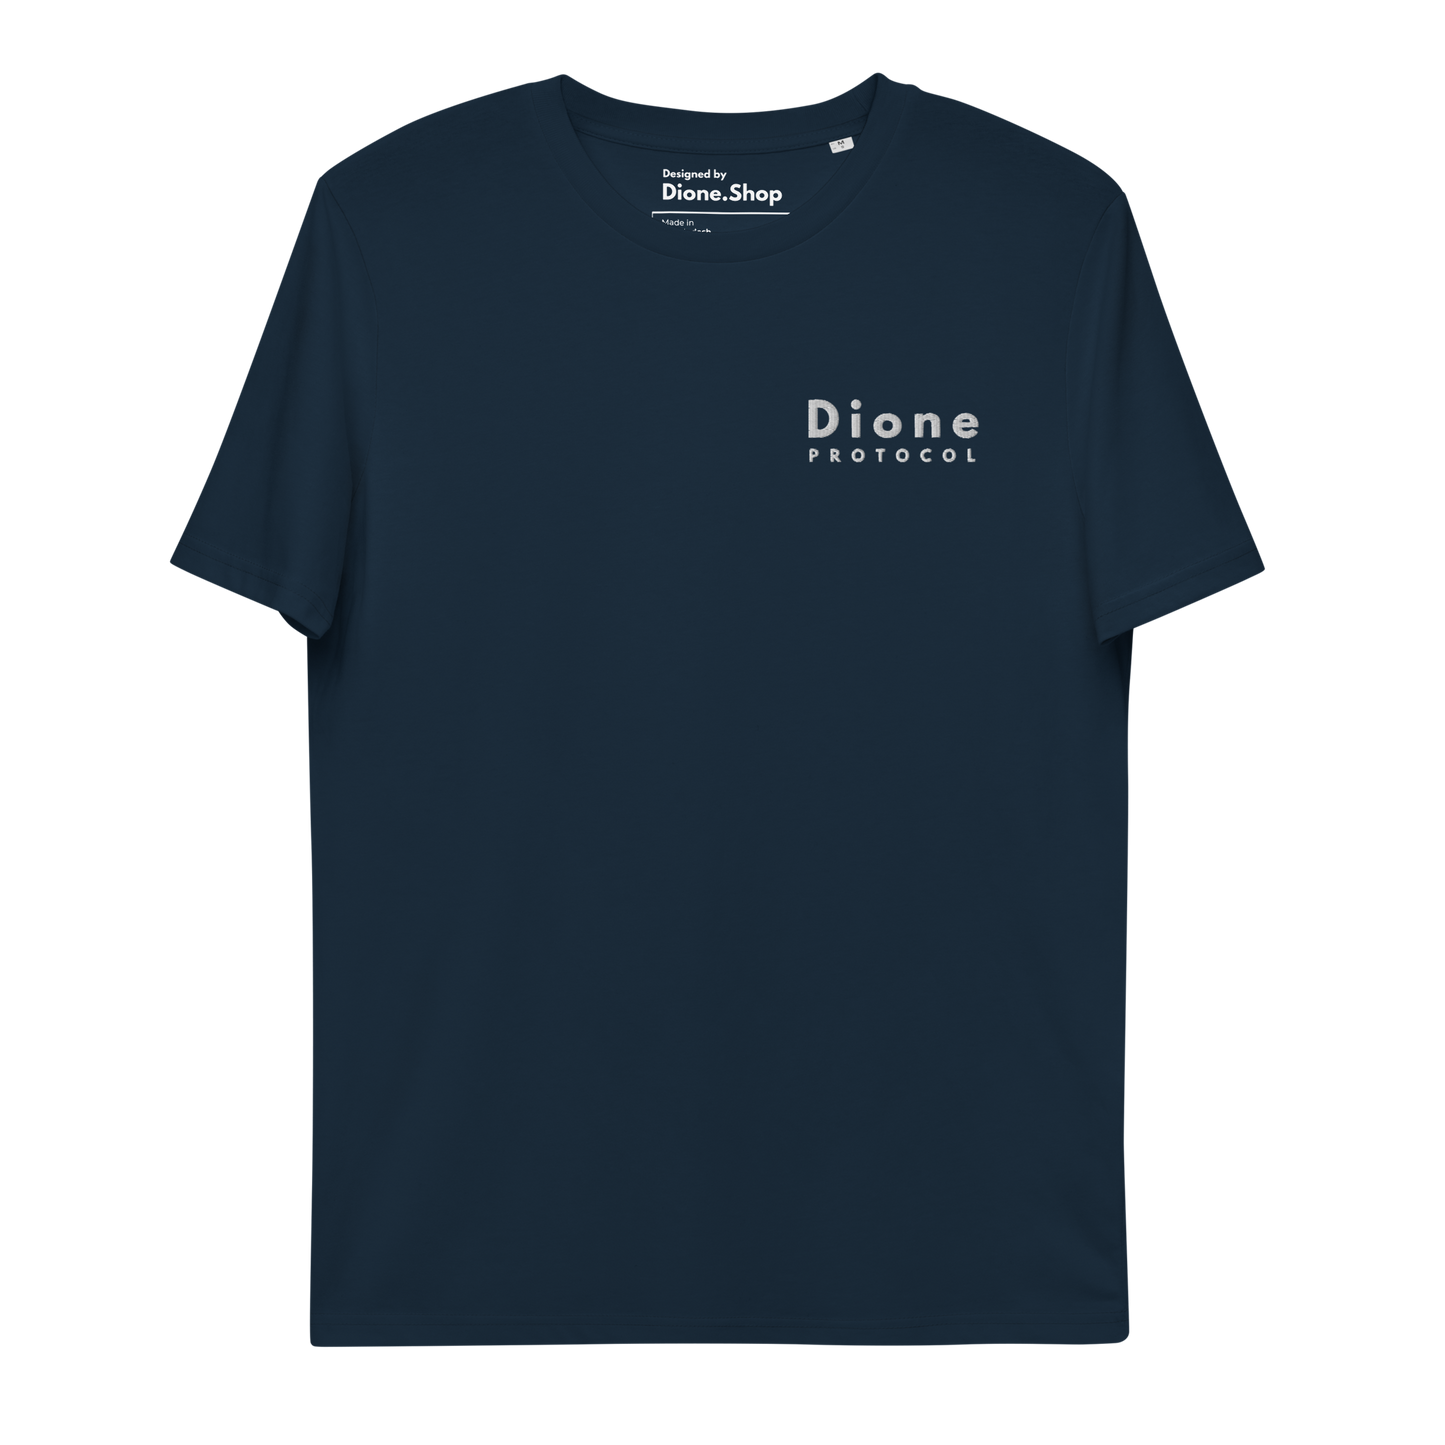 T-Shirt - Discreet V1.0 - Black, Navy, Grey - Premium